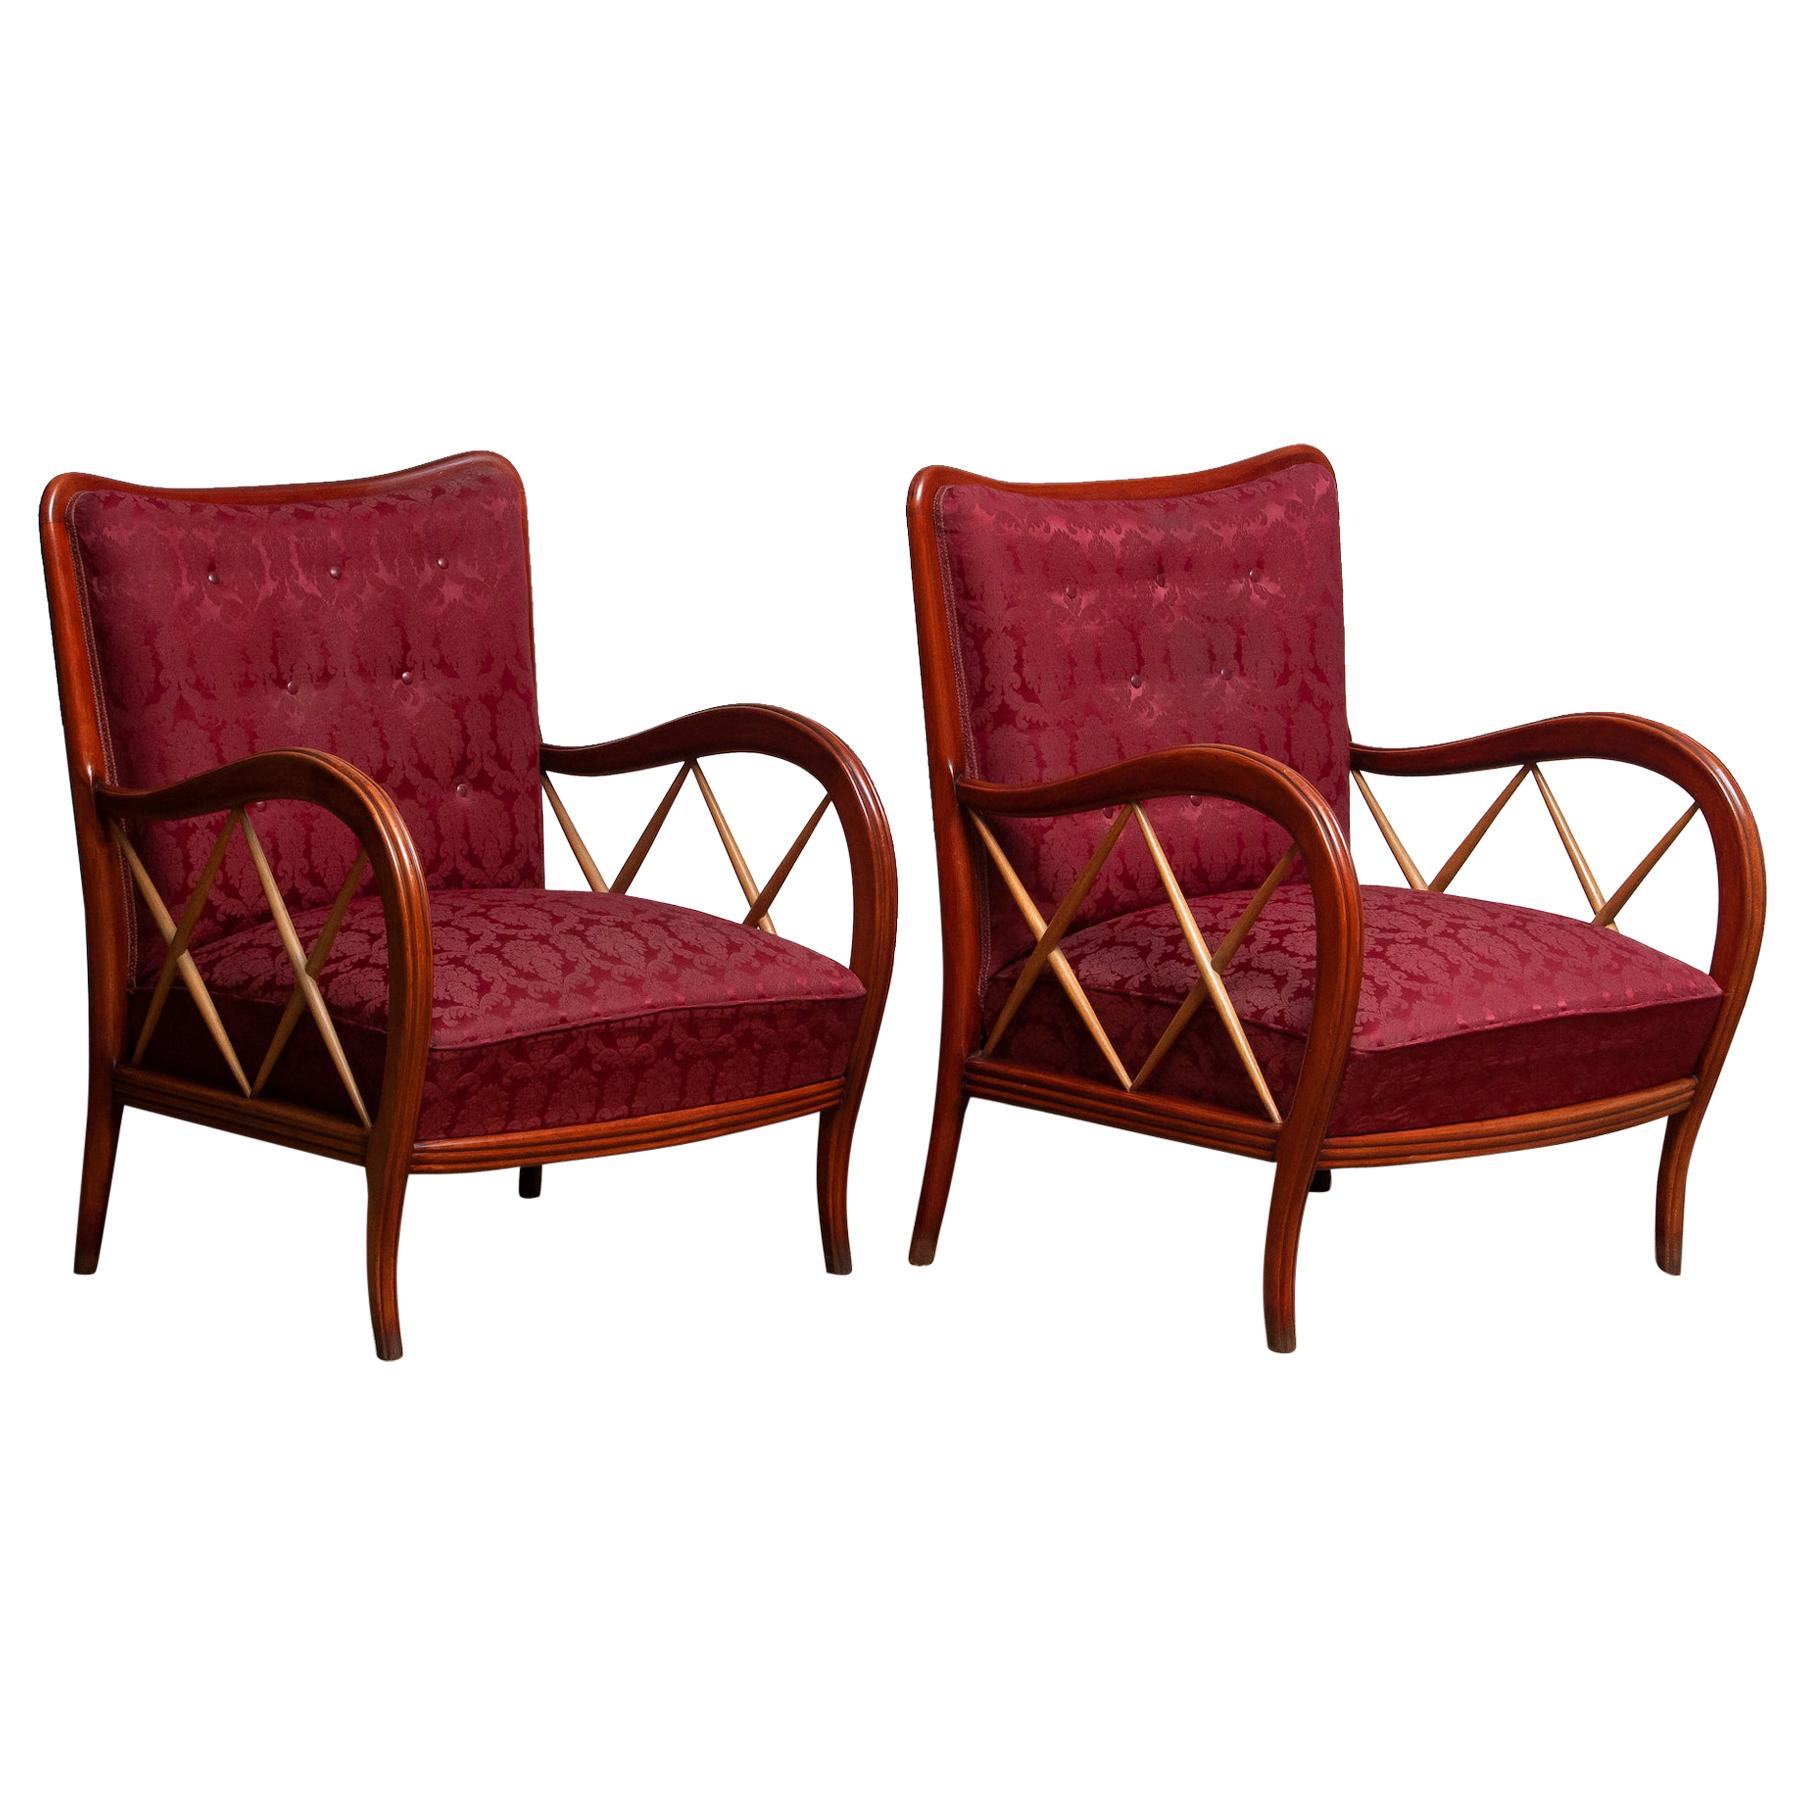 1940s Italian Pair of Paolo Buffa Lounge Chairs in Mahogany and Beech